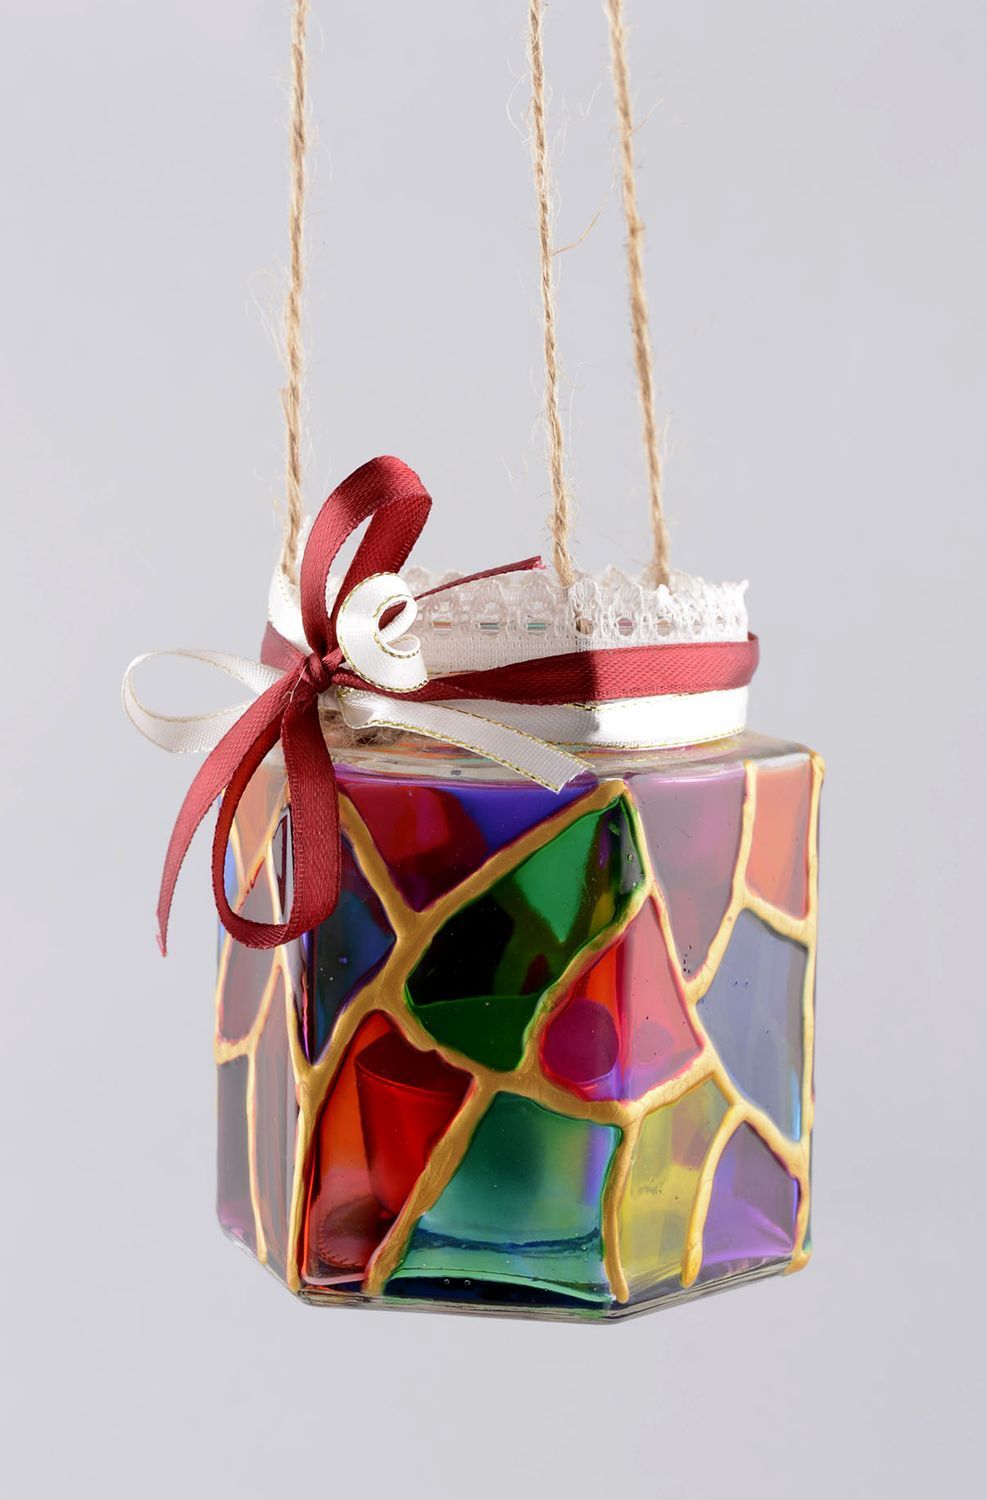 Beautiful handmade glass candlestick glass craft interior decorating gift ideas photo 1